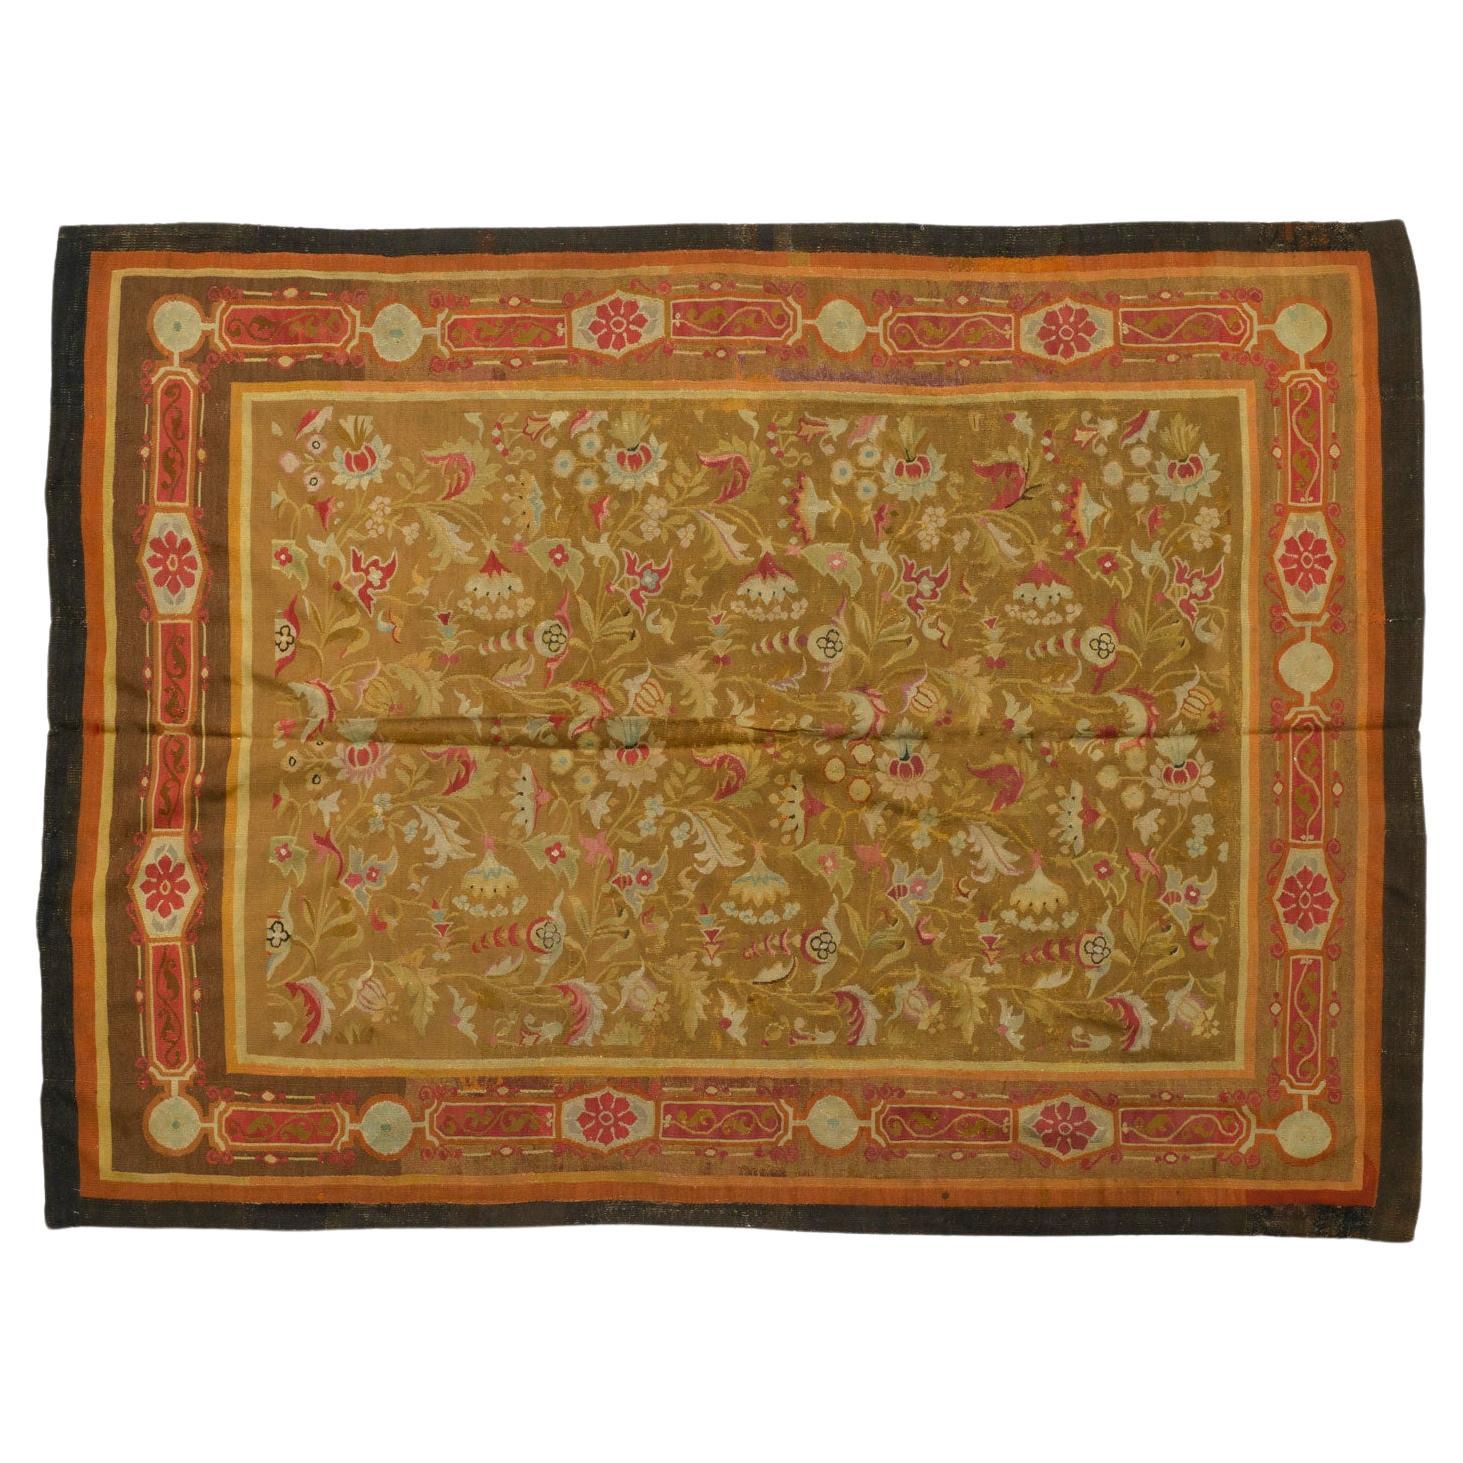 1800 France-Carpet Aubusson Handgewebte Wolle aus Frankreich